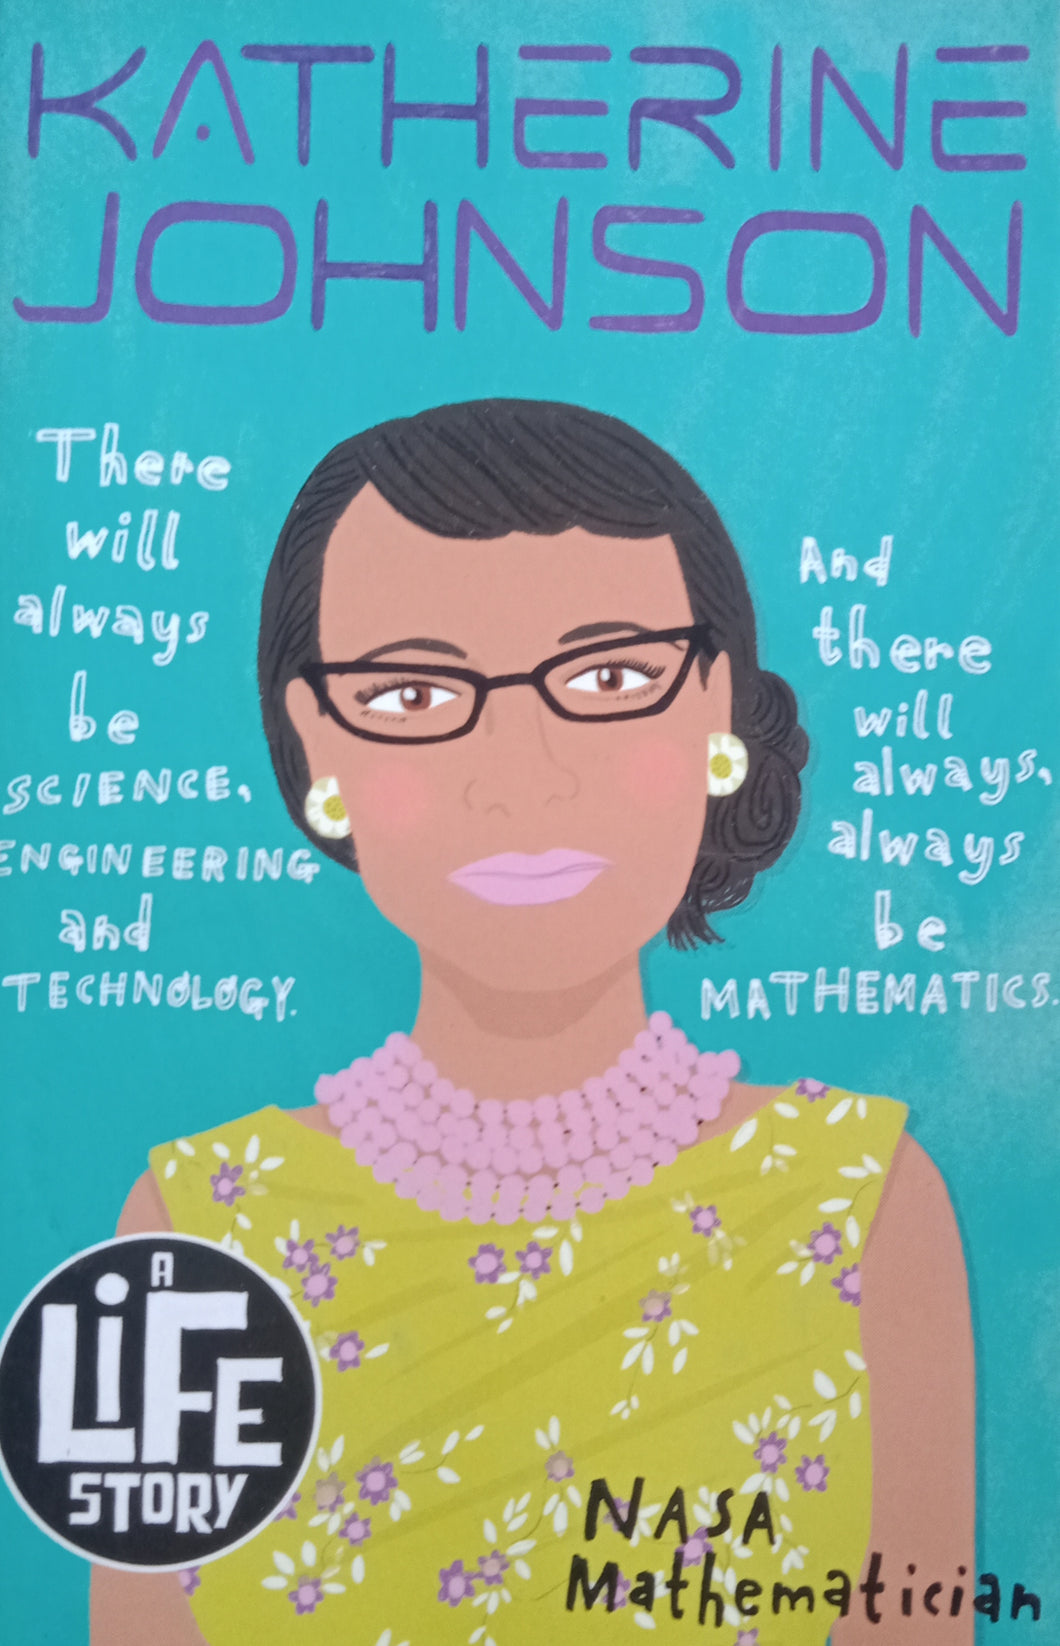 A Life Story Nasa Mathematician By: Katherine Johnson